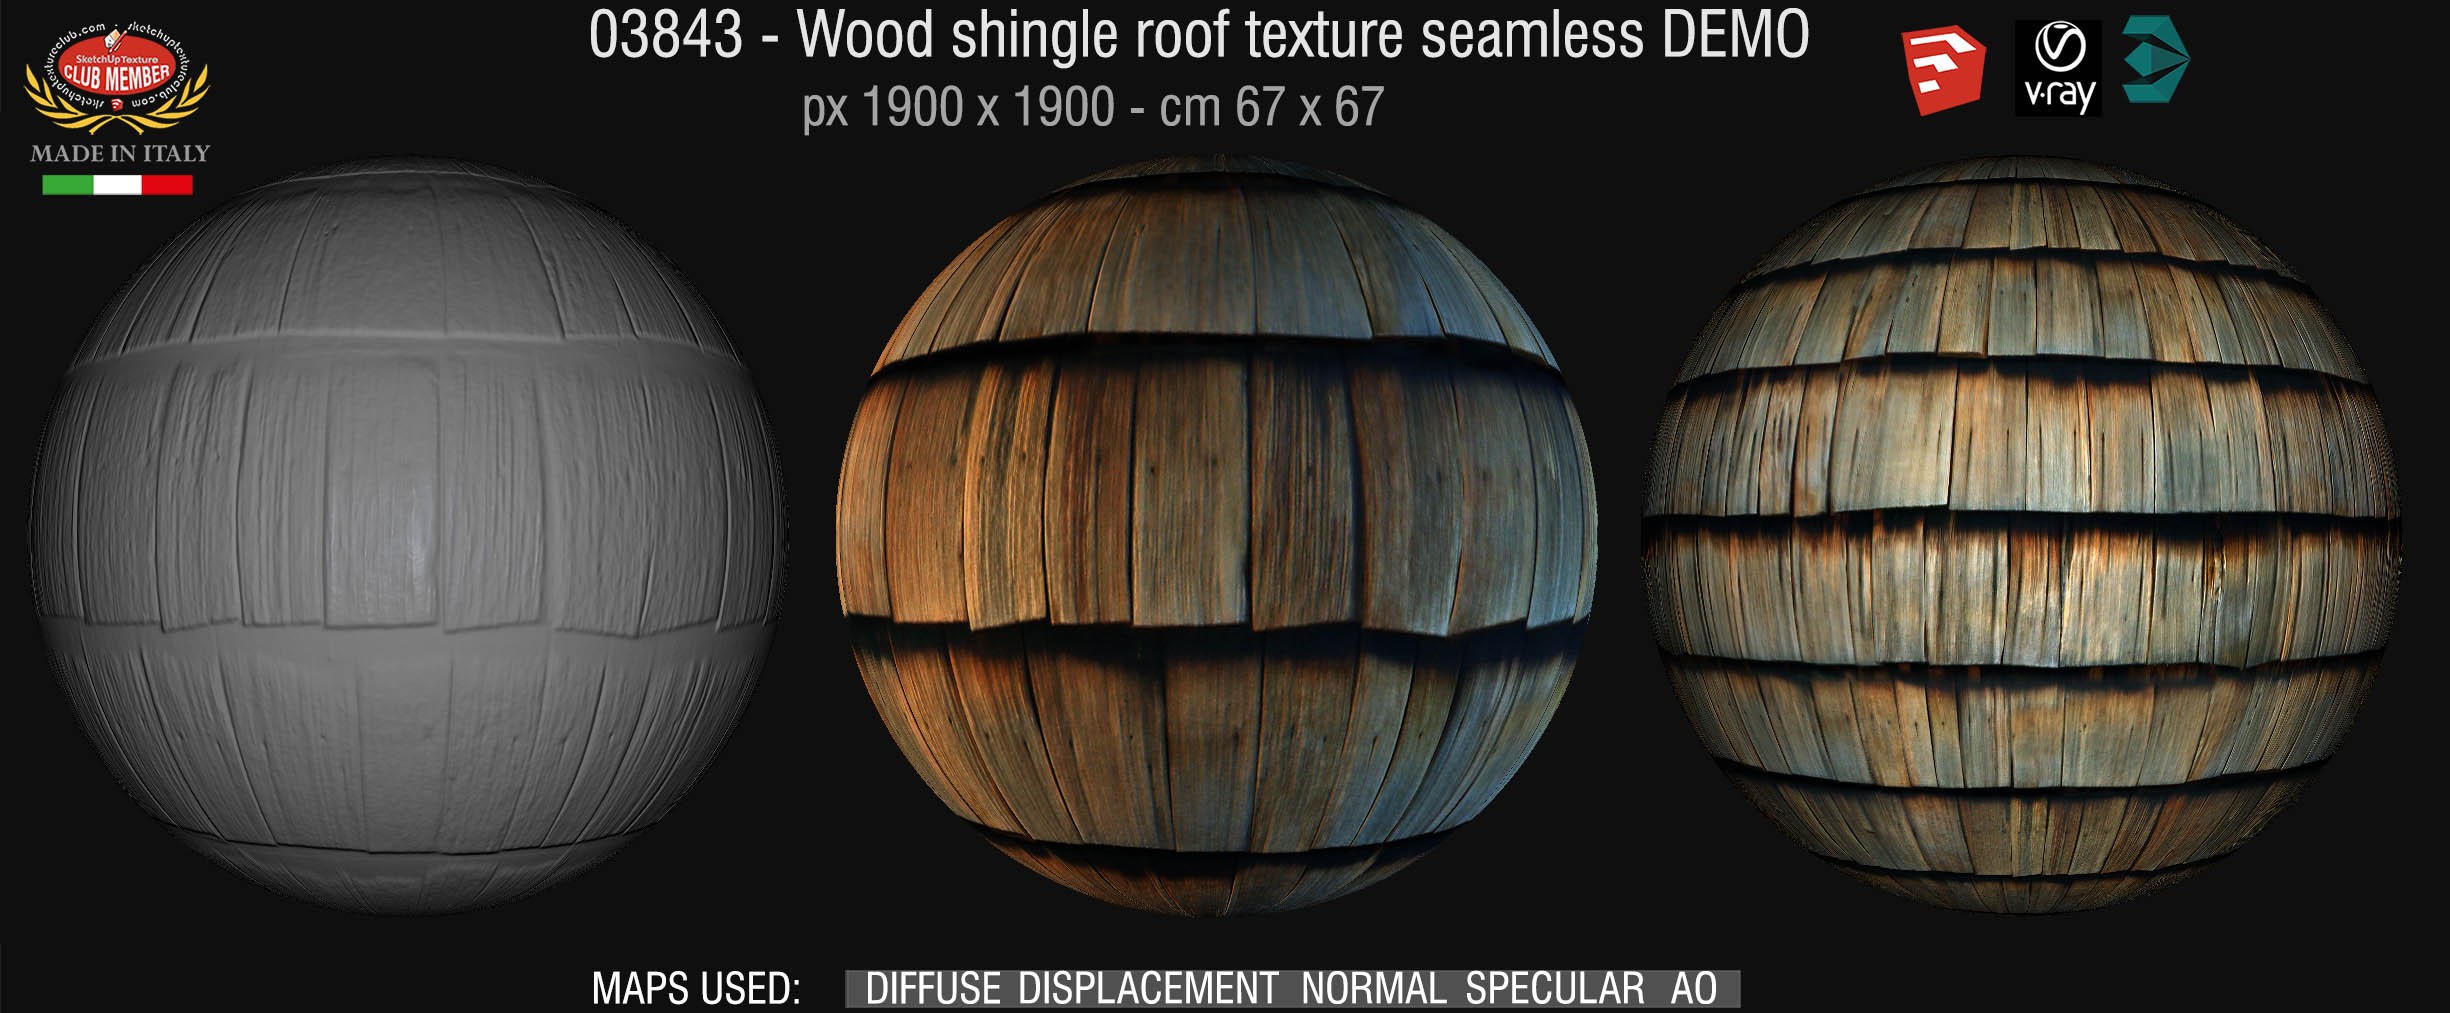 03843 Wood shingle roof texture seamless + maps DEMO